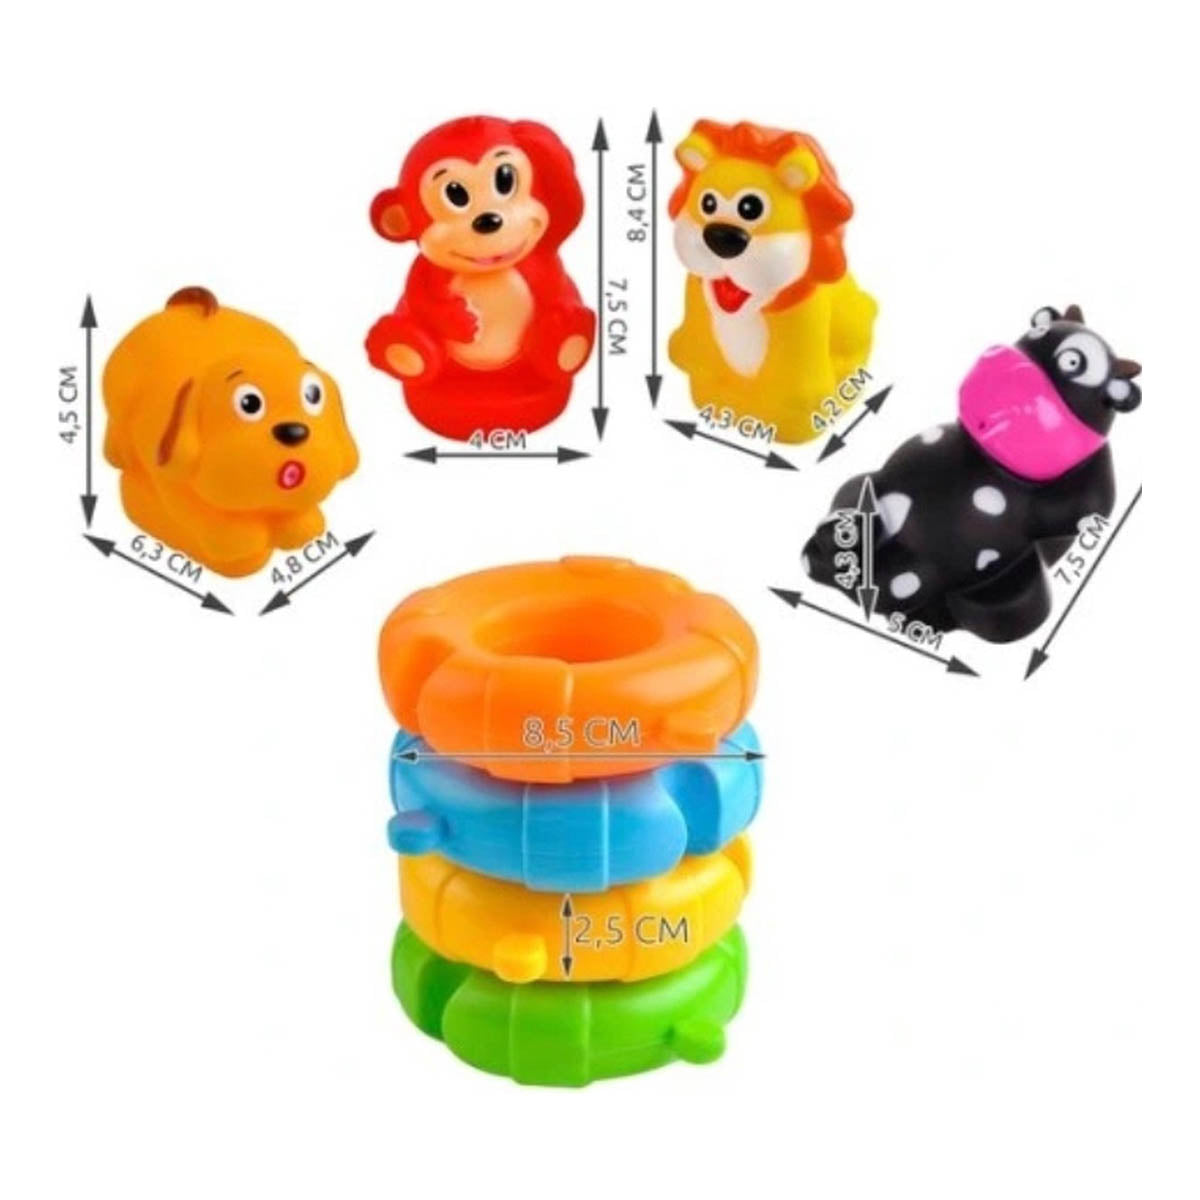 <tc>Ariko</tc> Bath toys, loose animals in life buoy - Rubber duck - lion - cow - monkey - dog